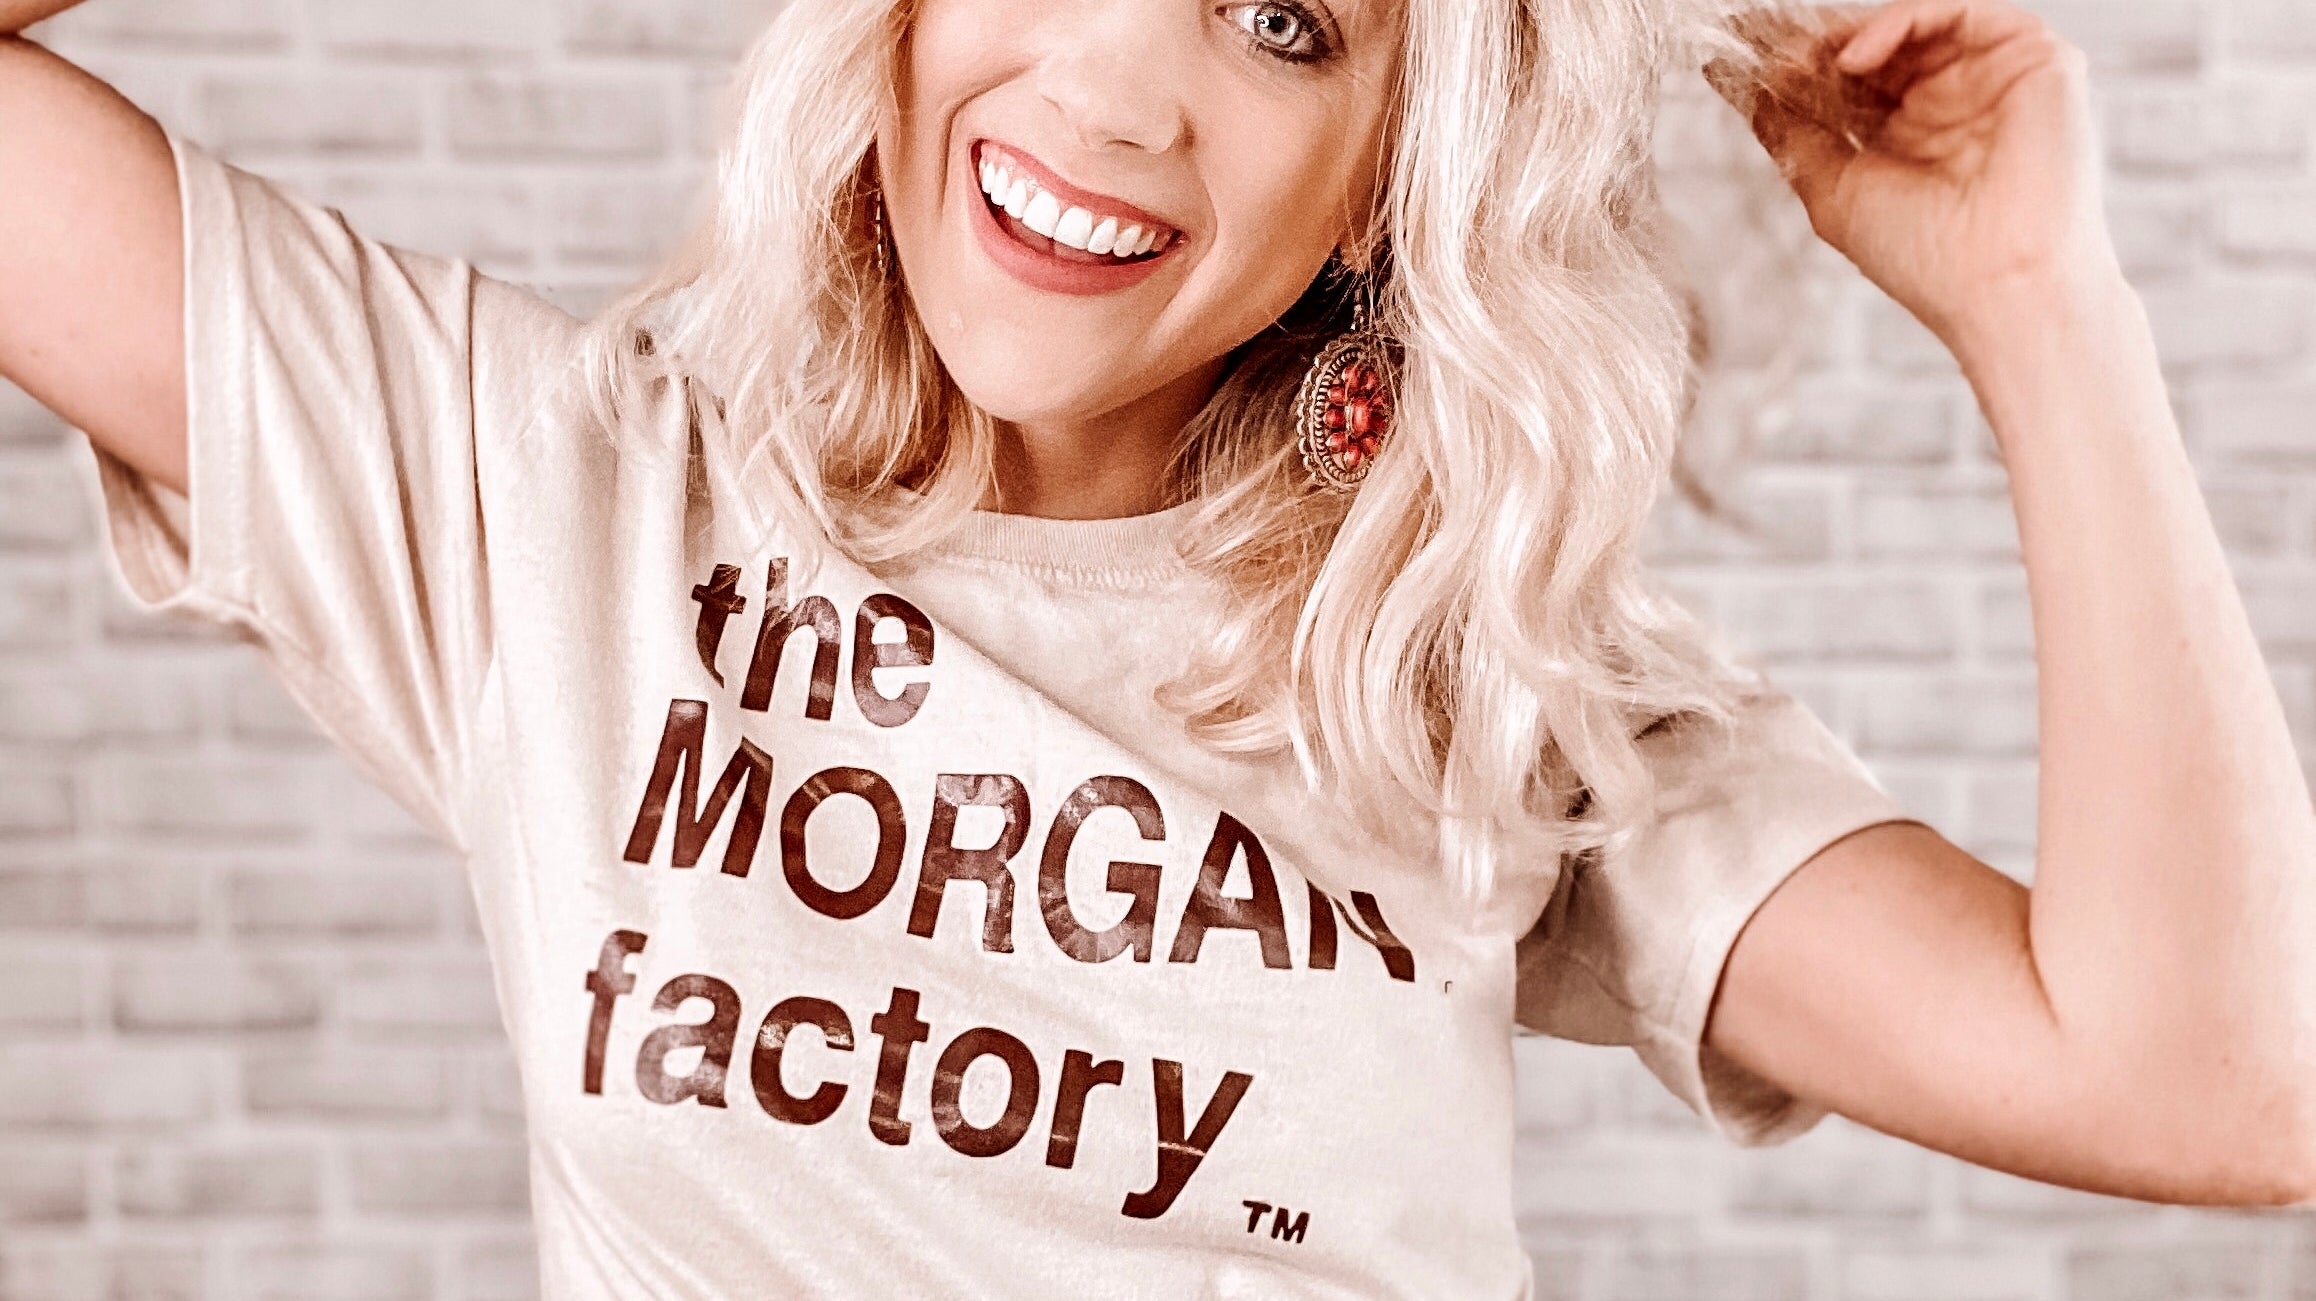 About Morgan of The Morgan Factory